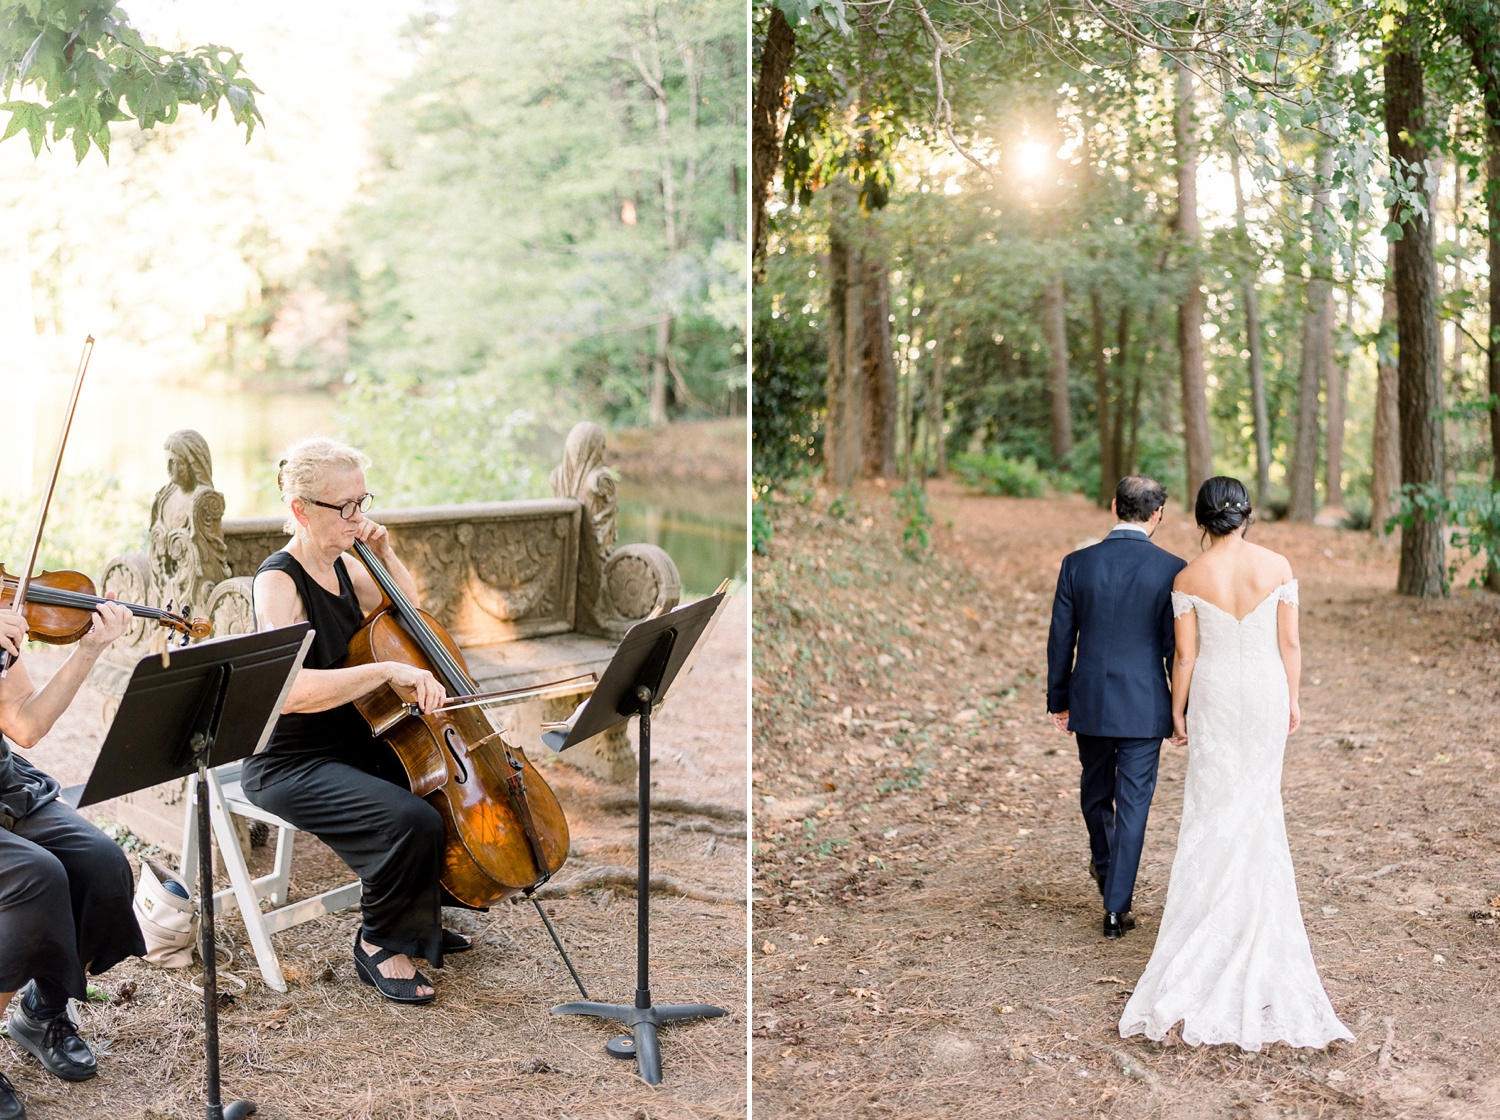 Aldridge Gardens Hoover Vestavia Wedding Day | Birmingham Alabama Wedding Photographers_0030.jpg